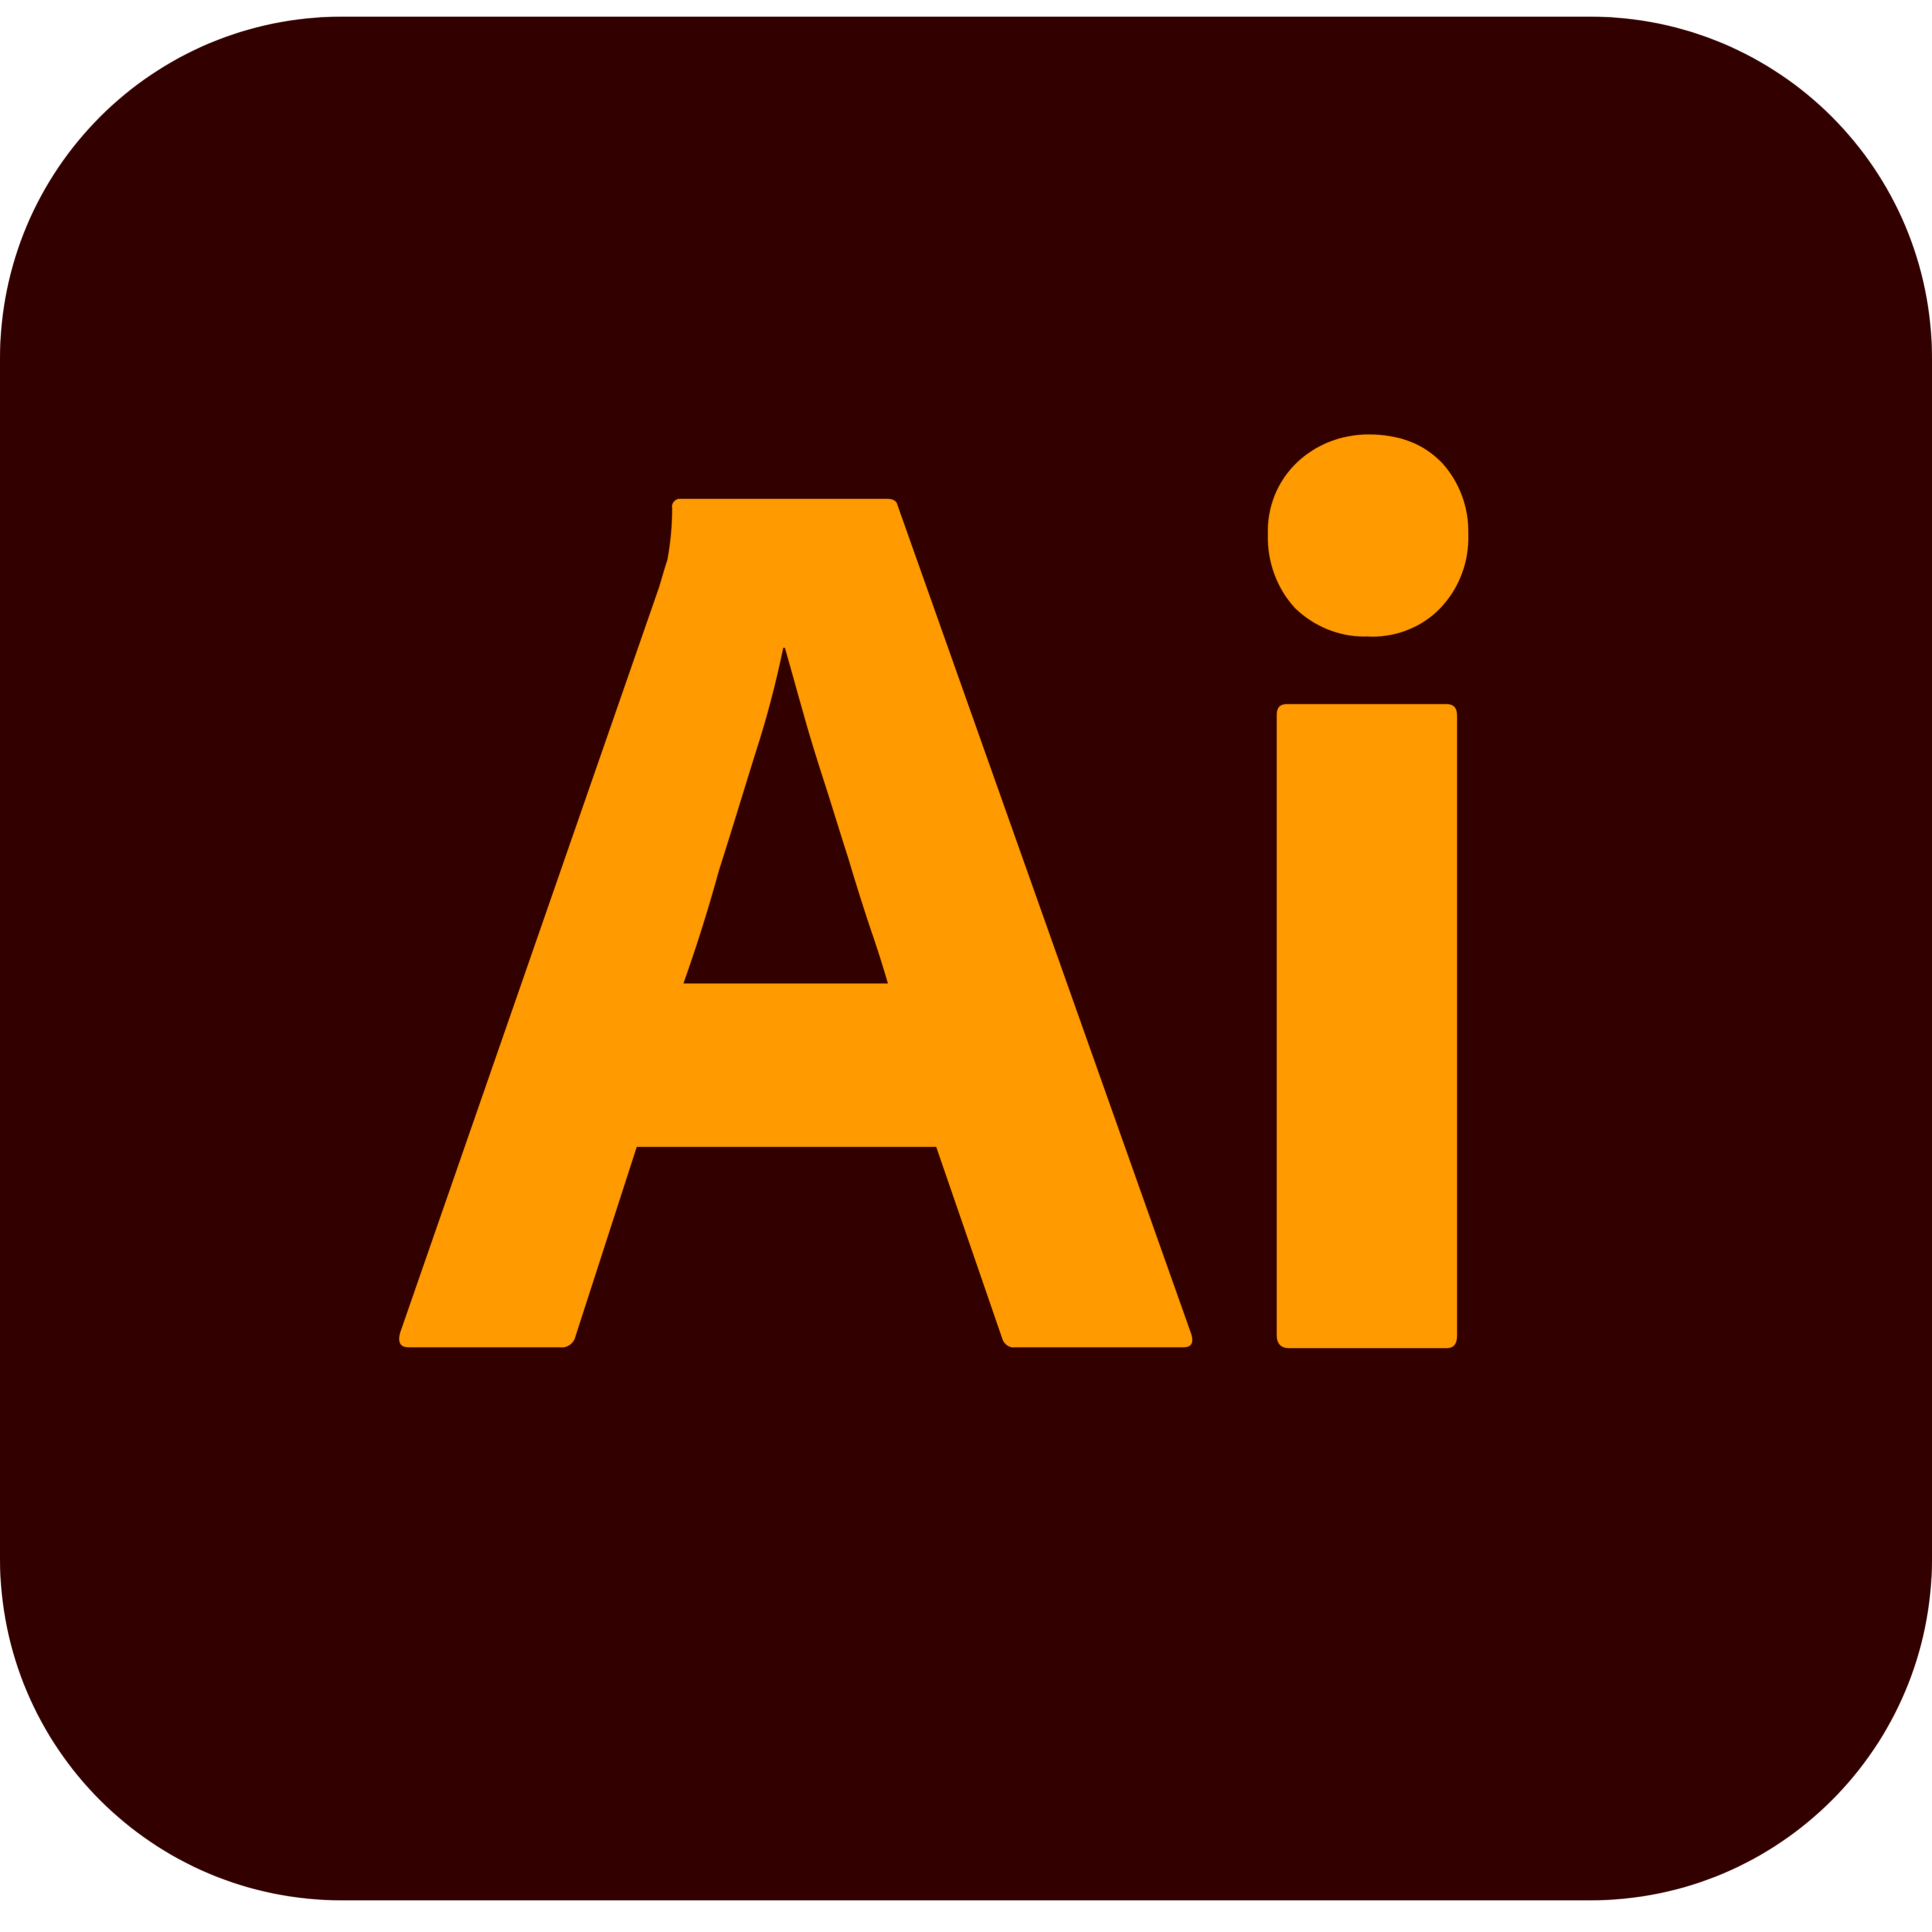 Ai icon. Адобе иллюстратор логотип. Адобе иллюстратор ярлык. Значок Adobe Illustrator. Ai логотип.